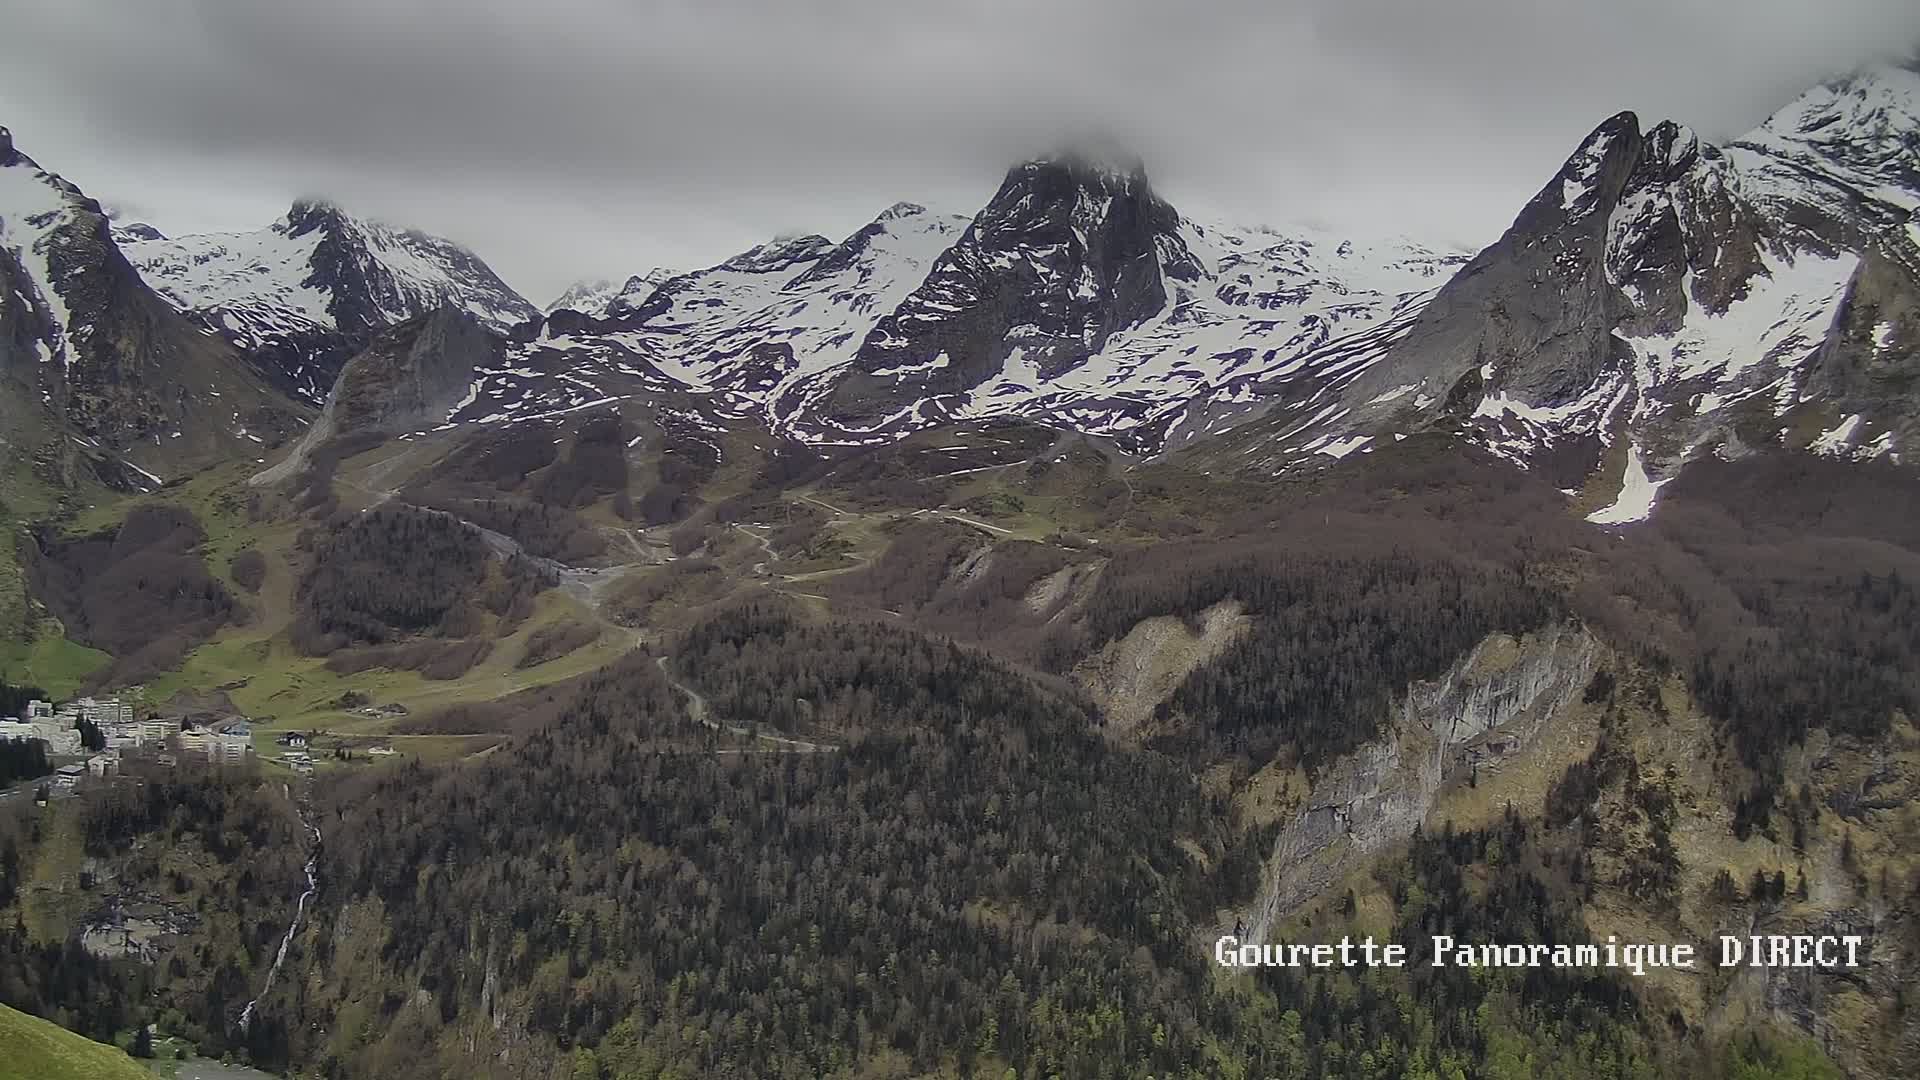 Webcam en Cirque de Gourette - Panoramique